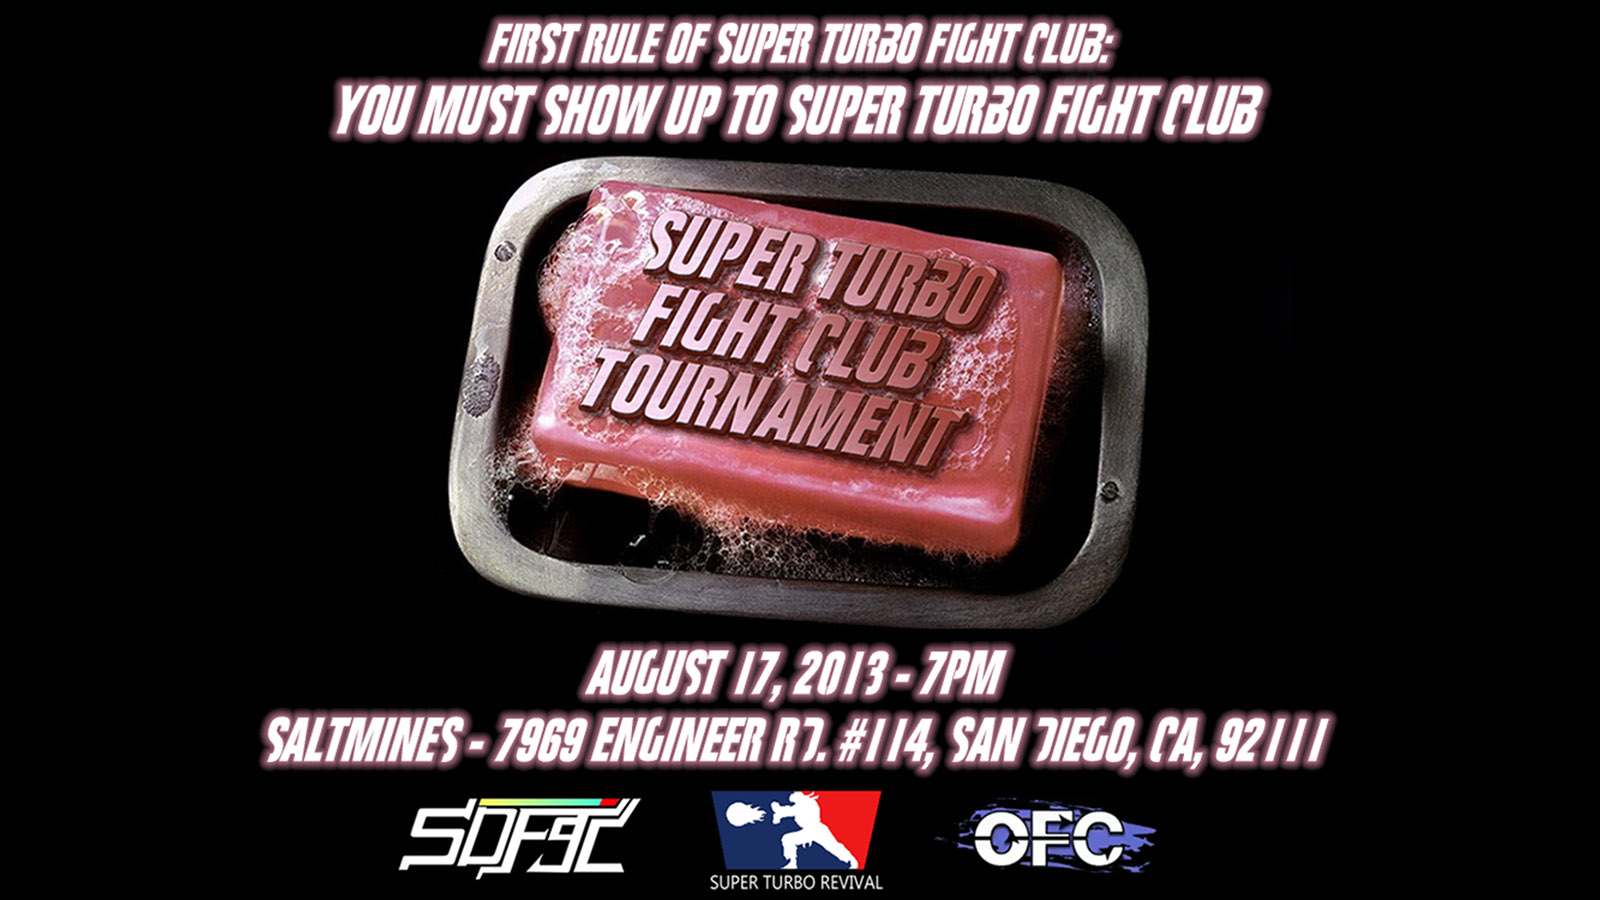 Super Turbo Fight Club tournament promotion